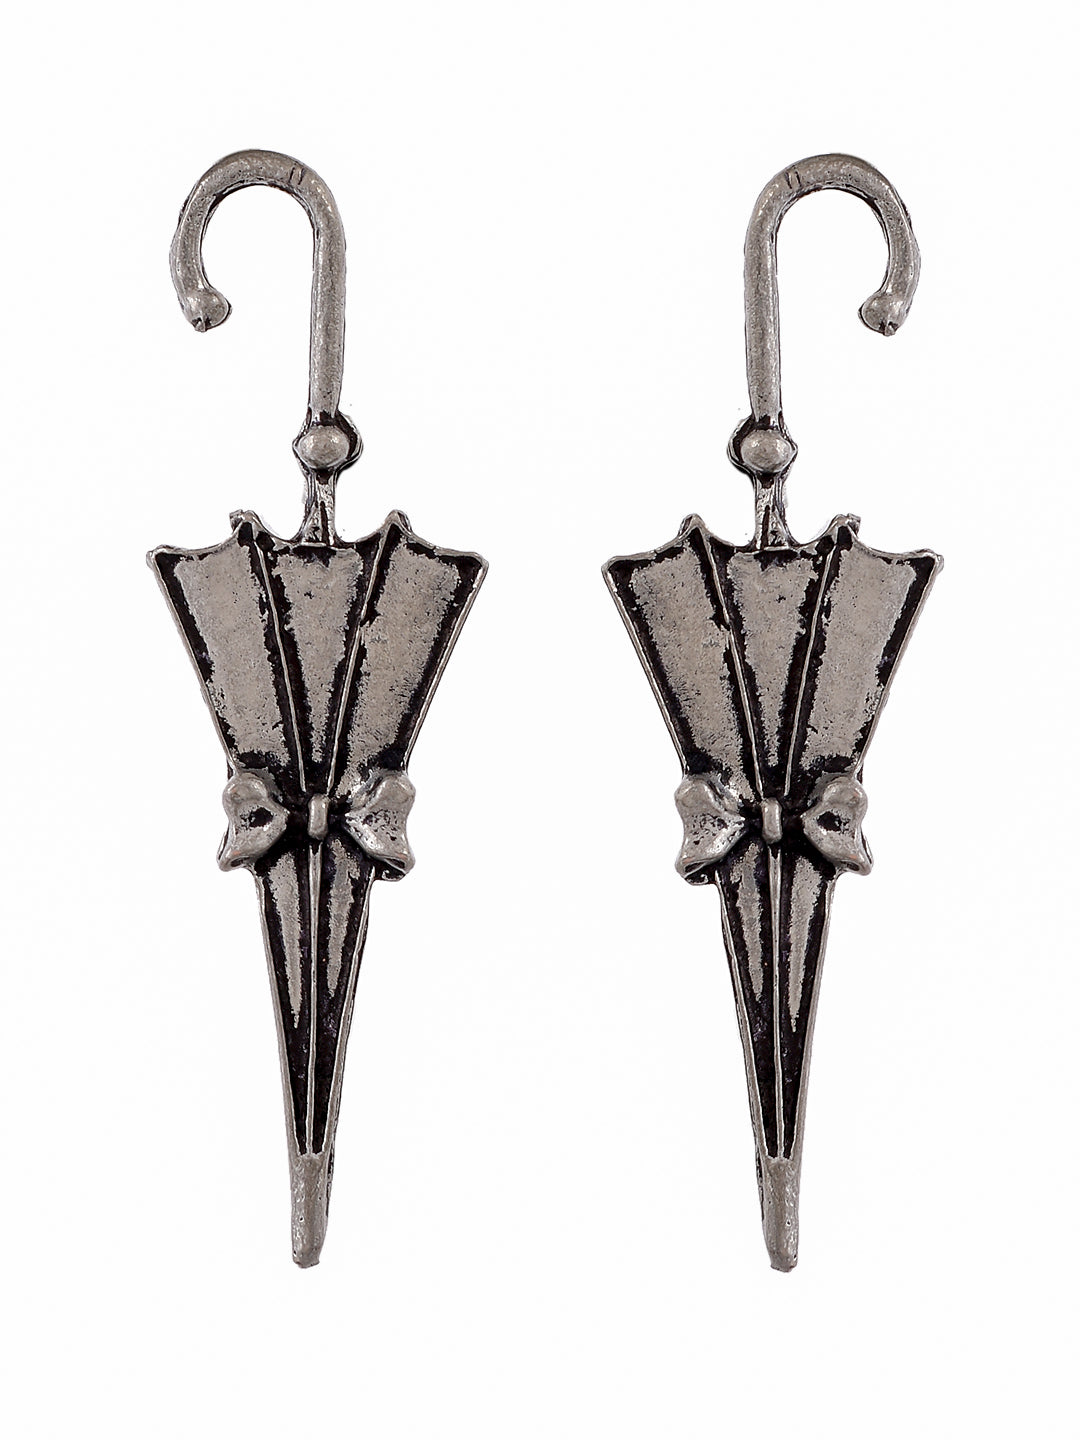 Oxidised Cute Umbrella Antique Earrings for Women Online